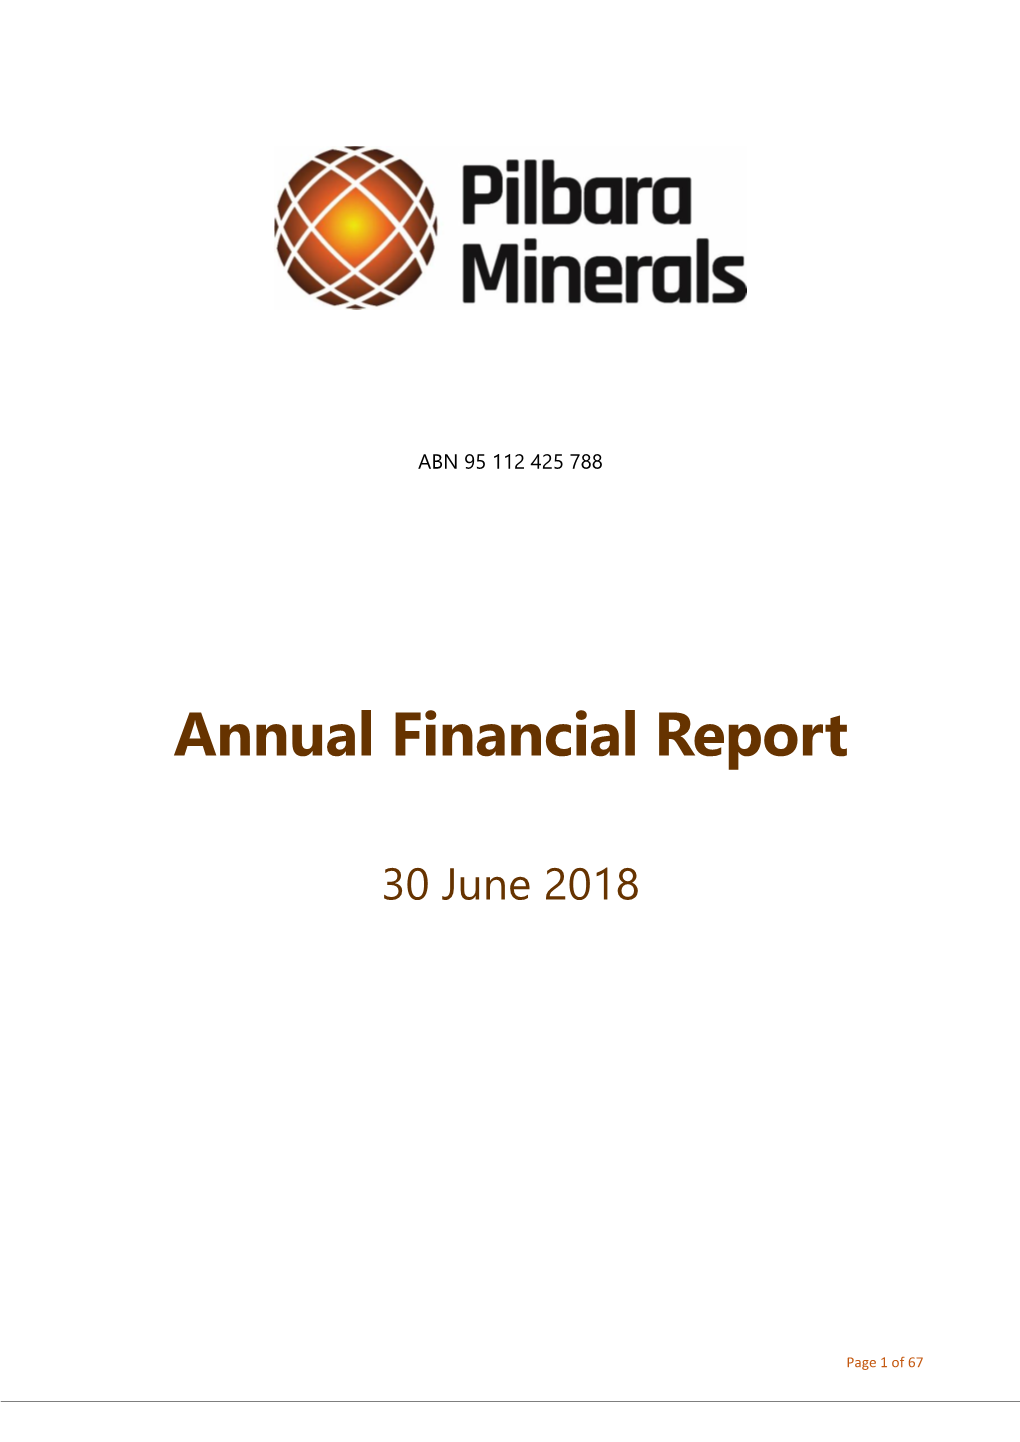 Financial Report for 30 June 2018